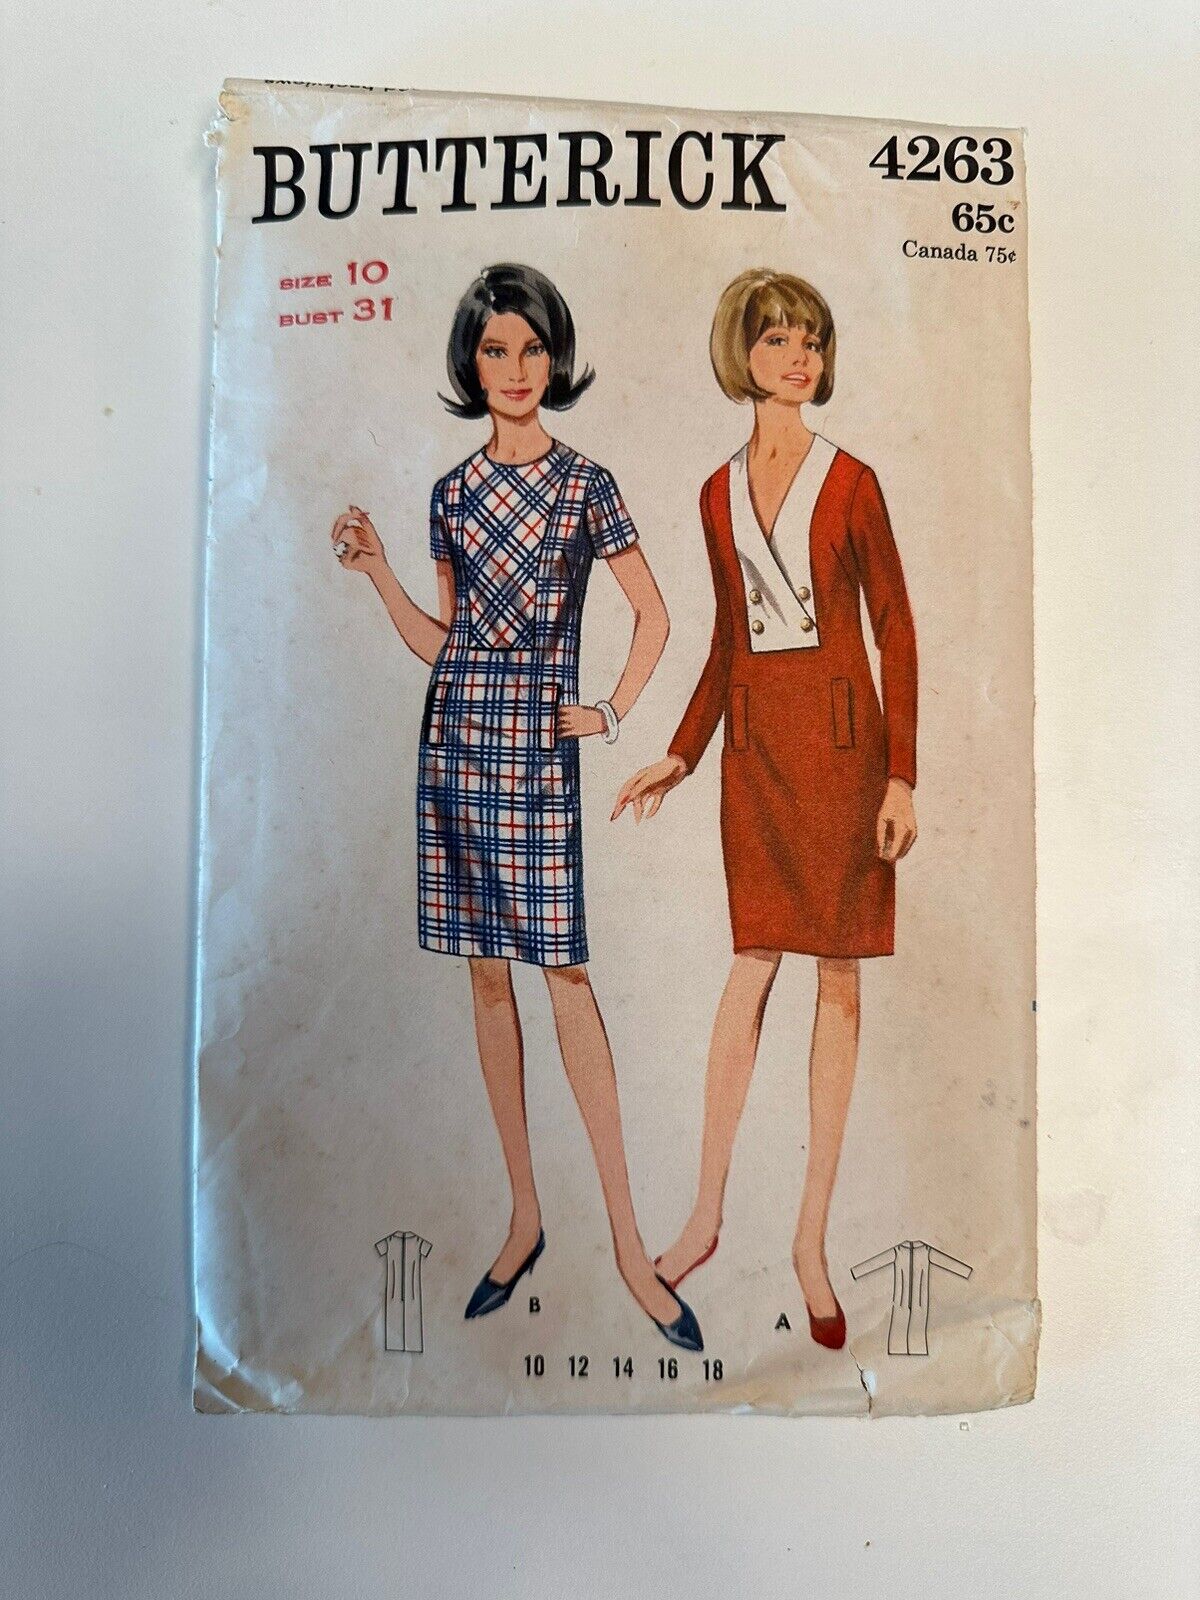 Butterick 4263 Dress Sewing Pattern Size 10 Bust 31, Vintage Classic Dress/ Cut